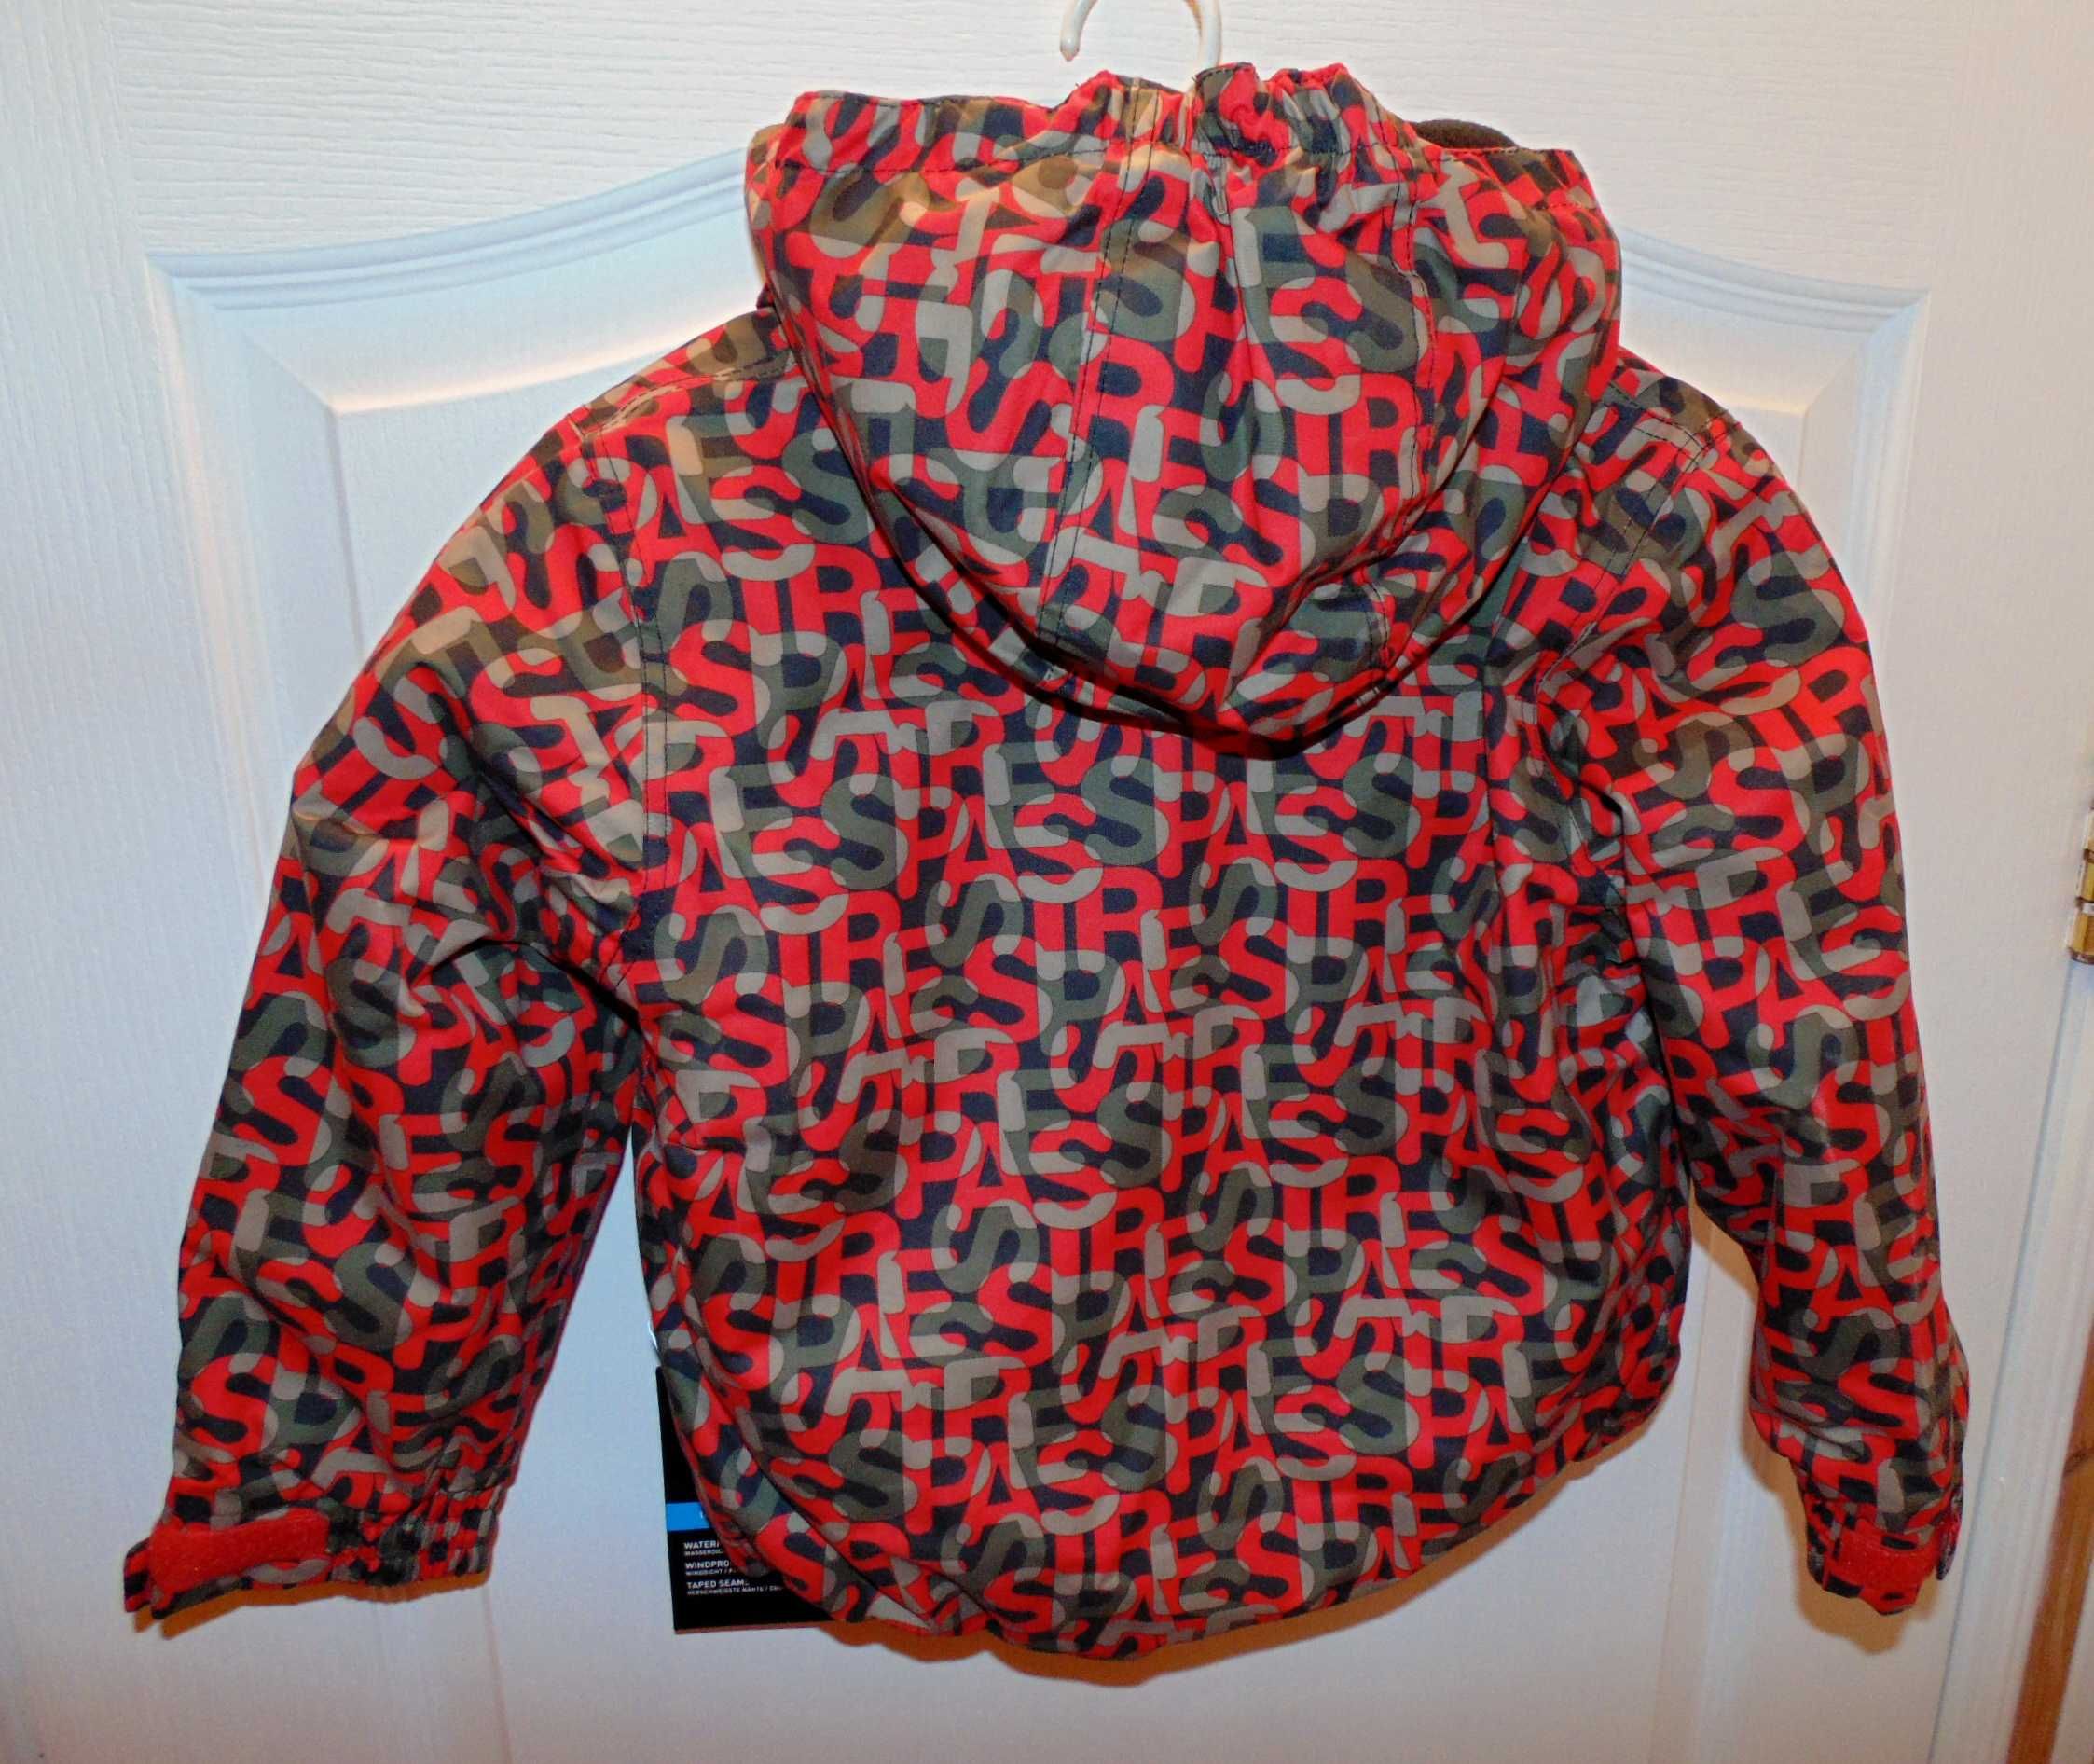 Яркая зимняя термо куртка Trespass.Размер 2-3г. 92-98см.Новая